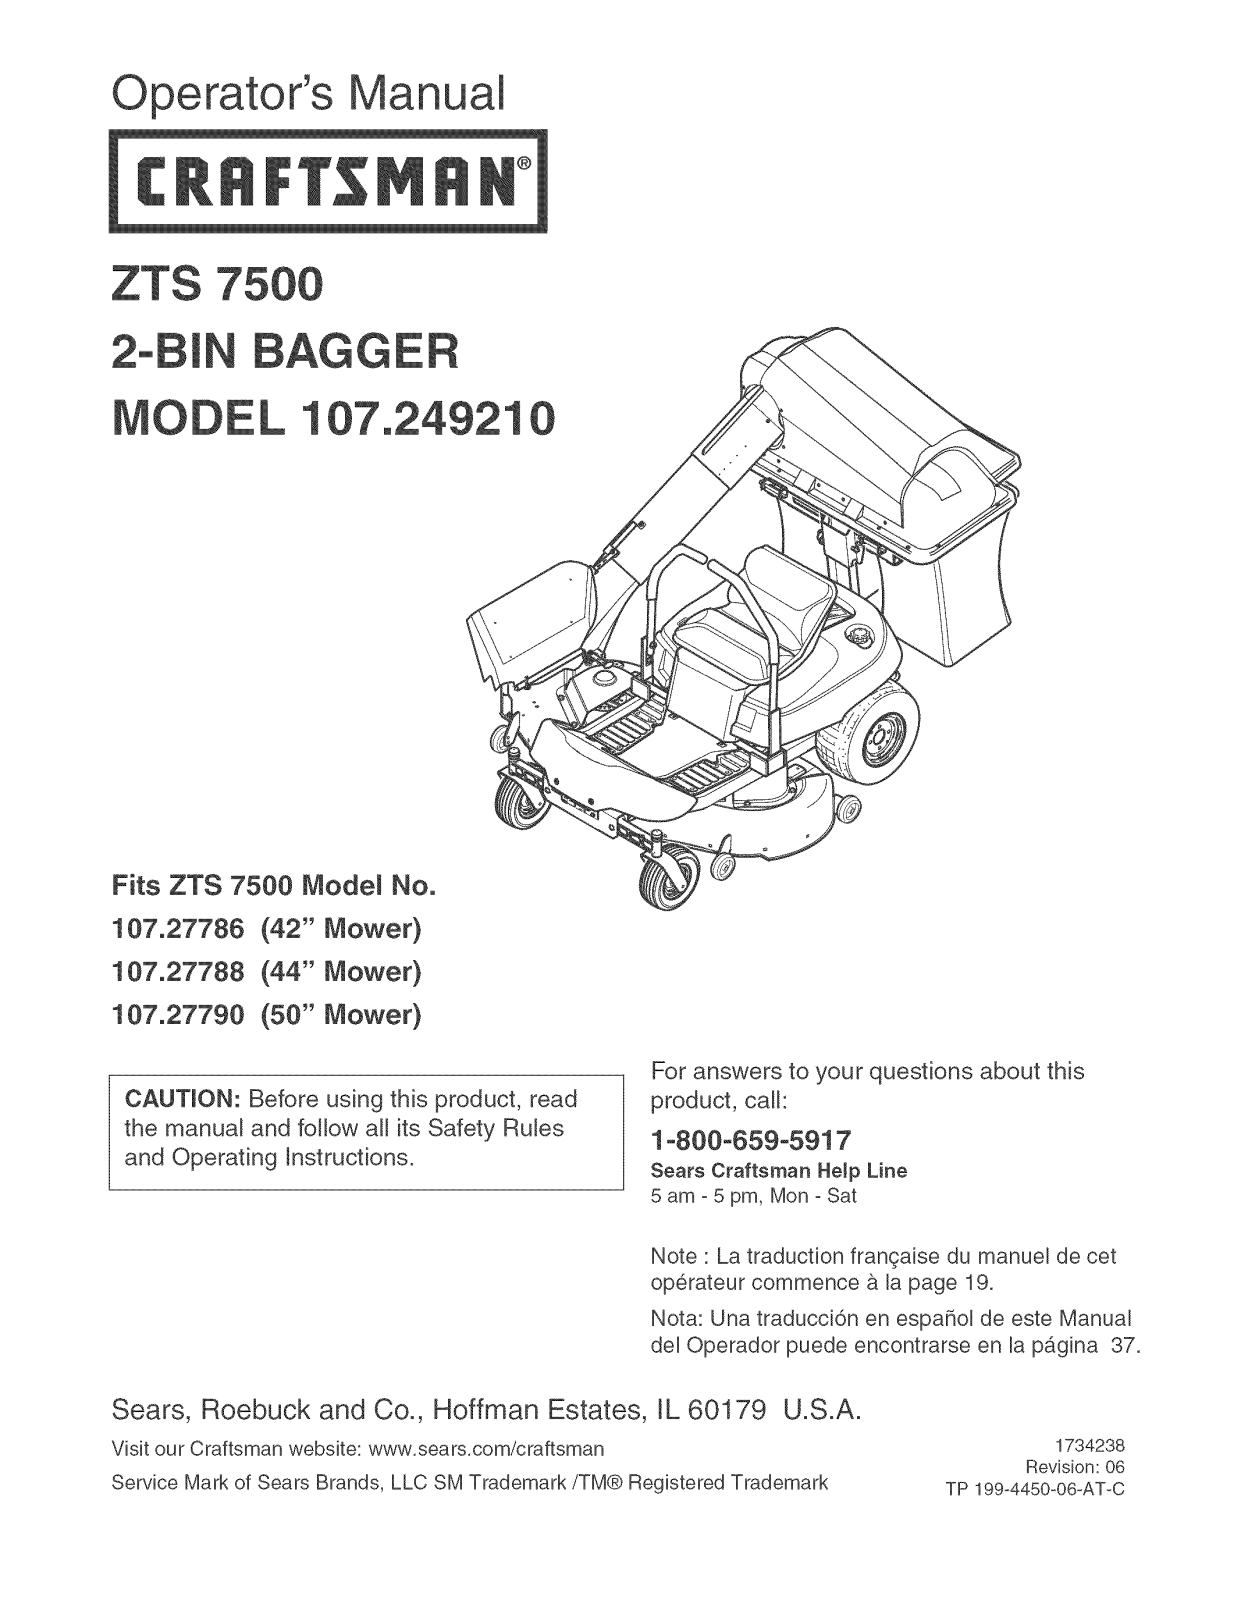 Craftsman 10727790, 107277880, 107277860, 107249210 Owner’s Manual